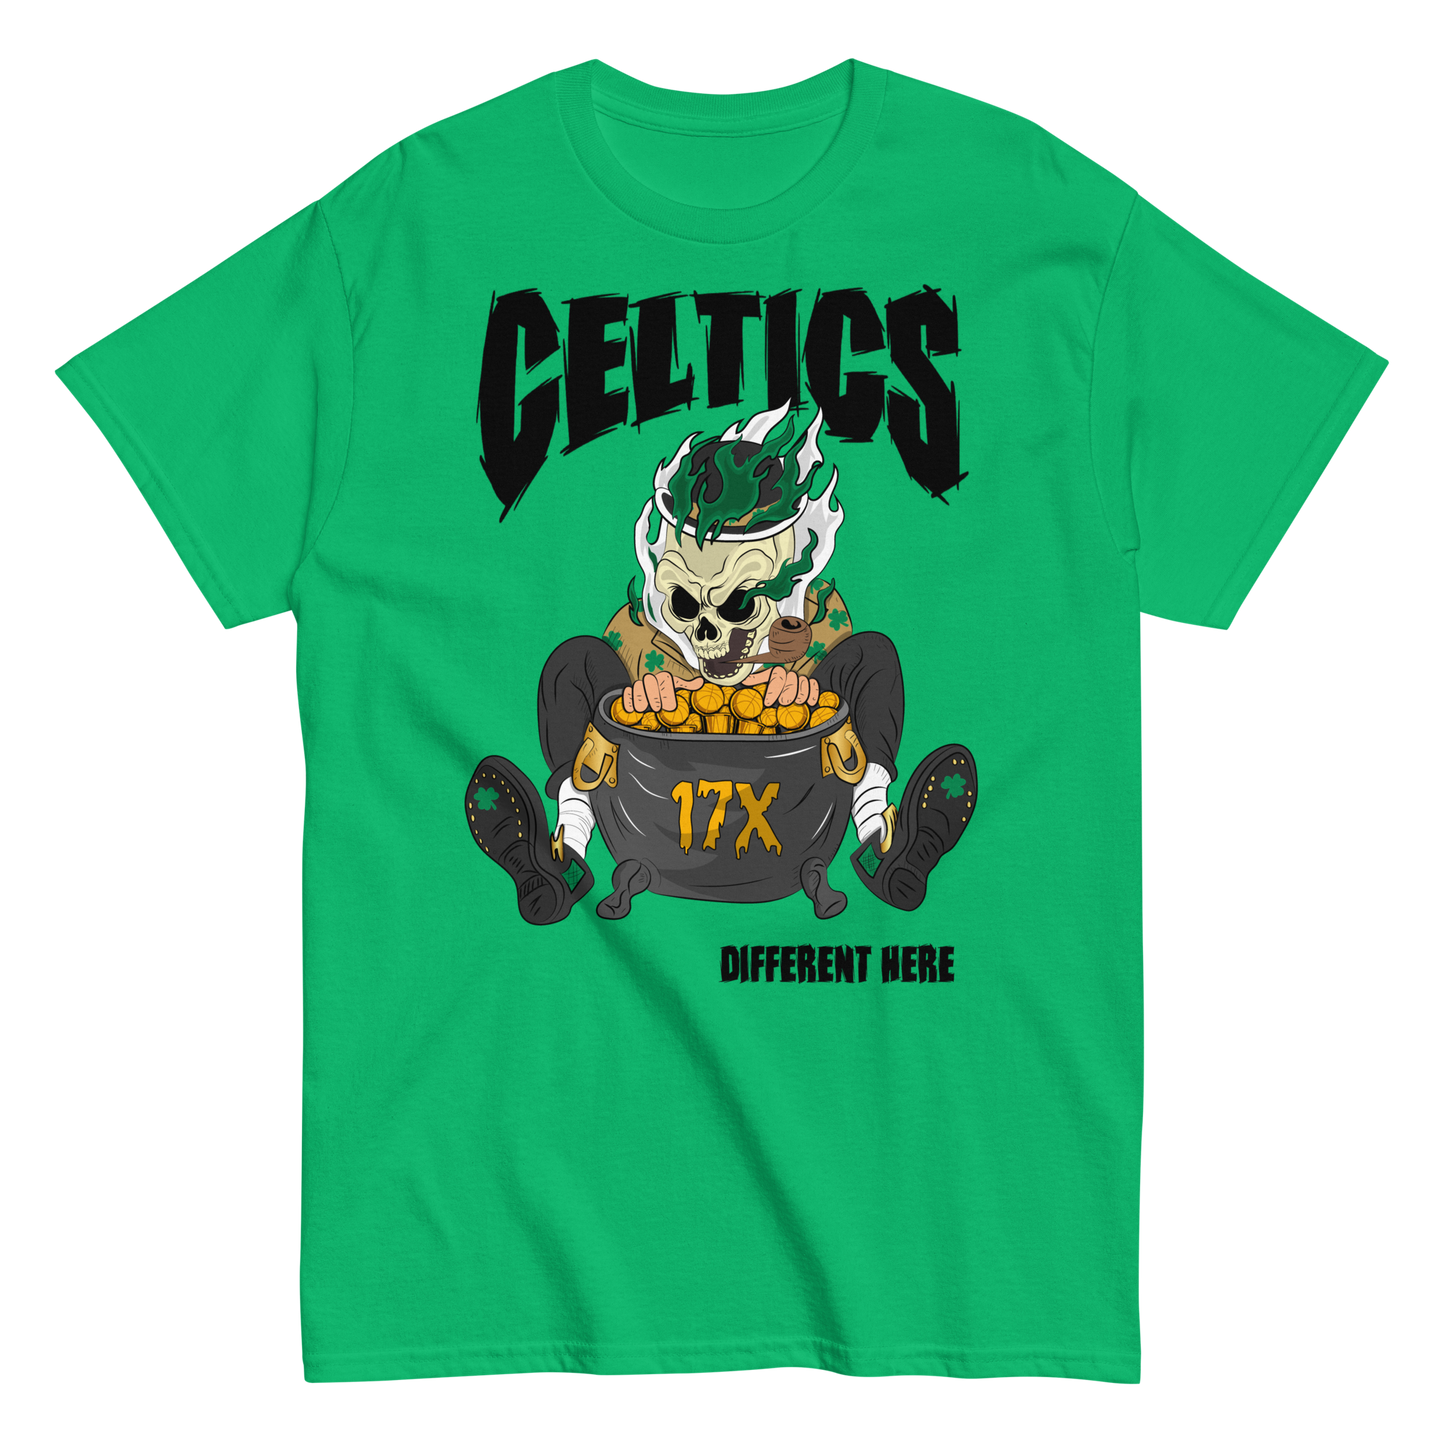 Celtics Gold Classic Tee